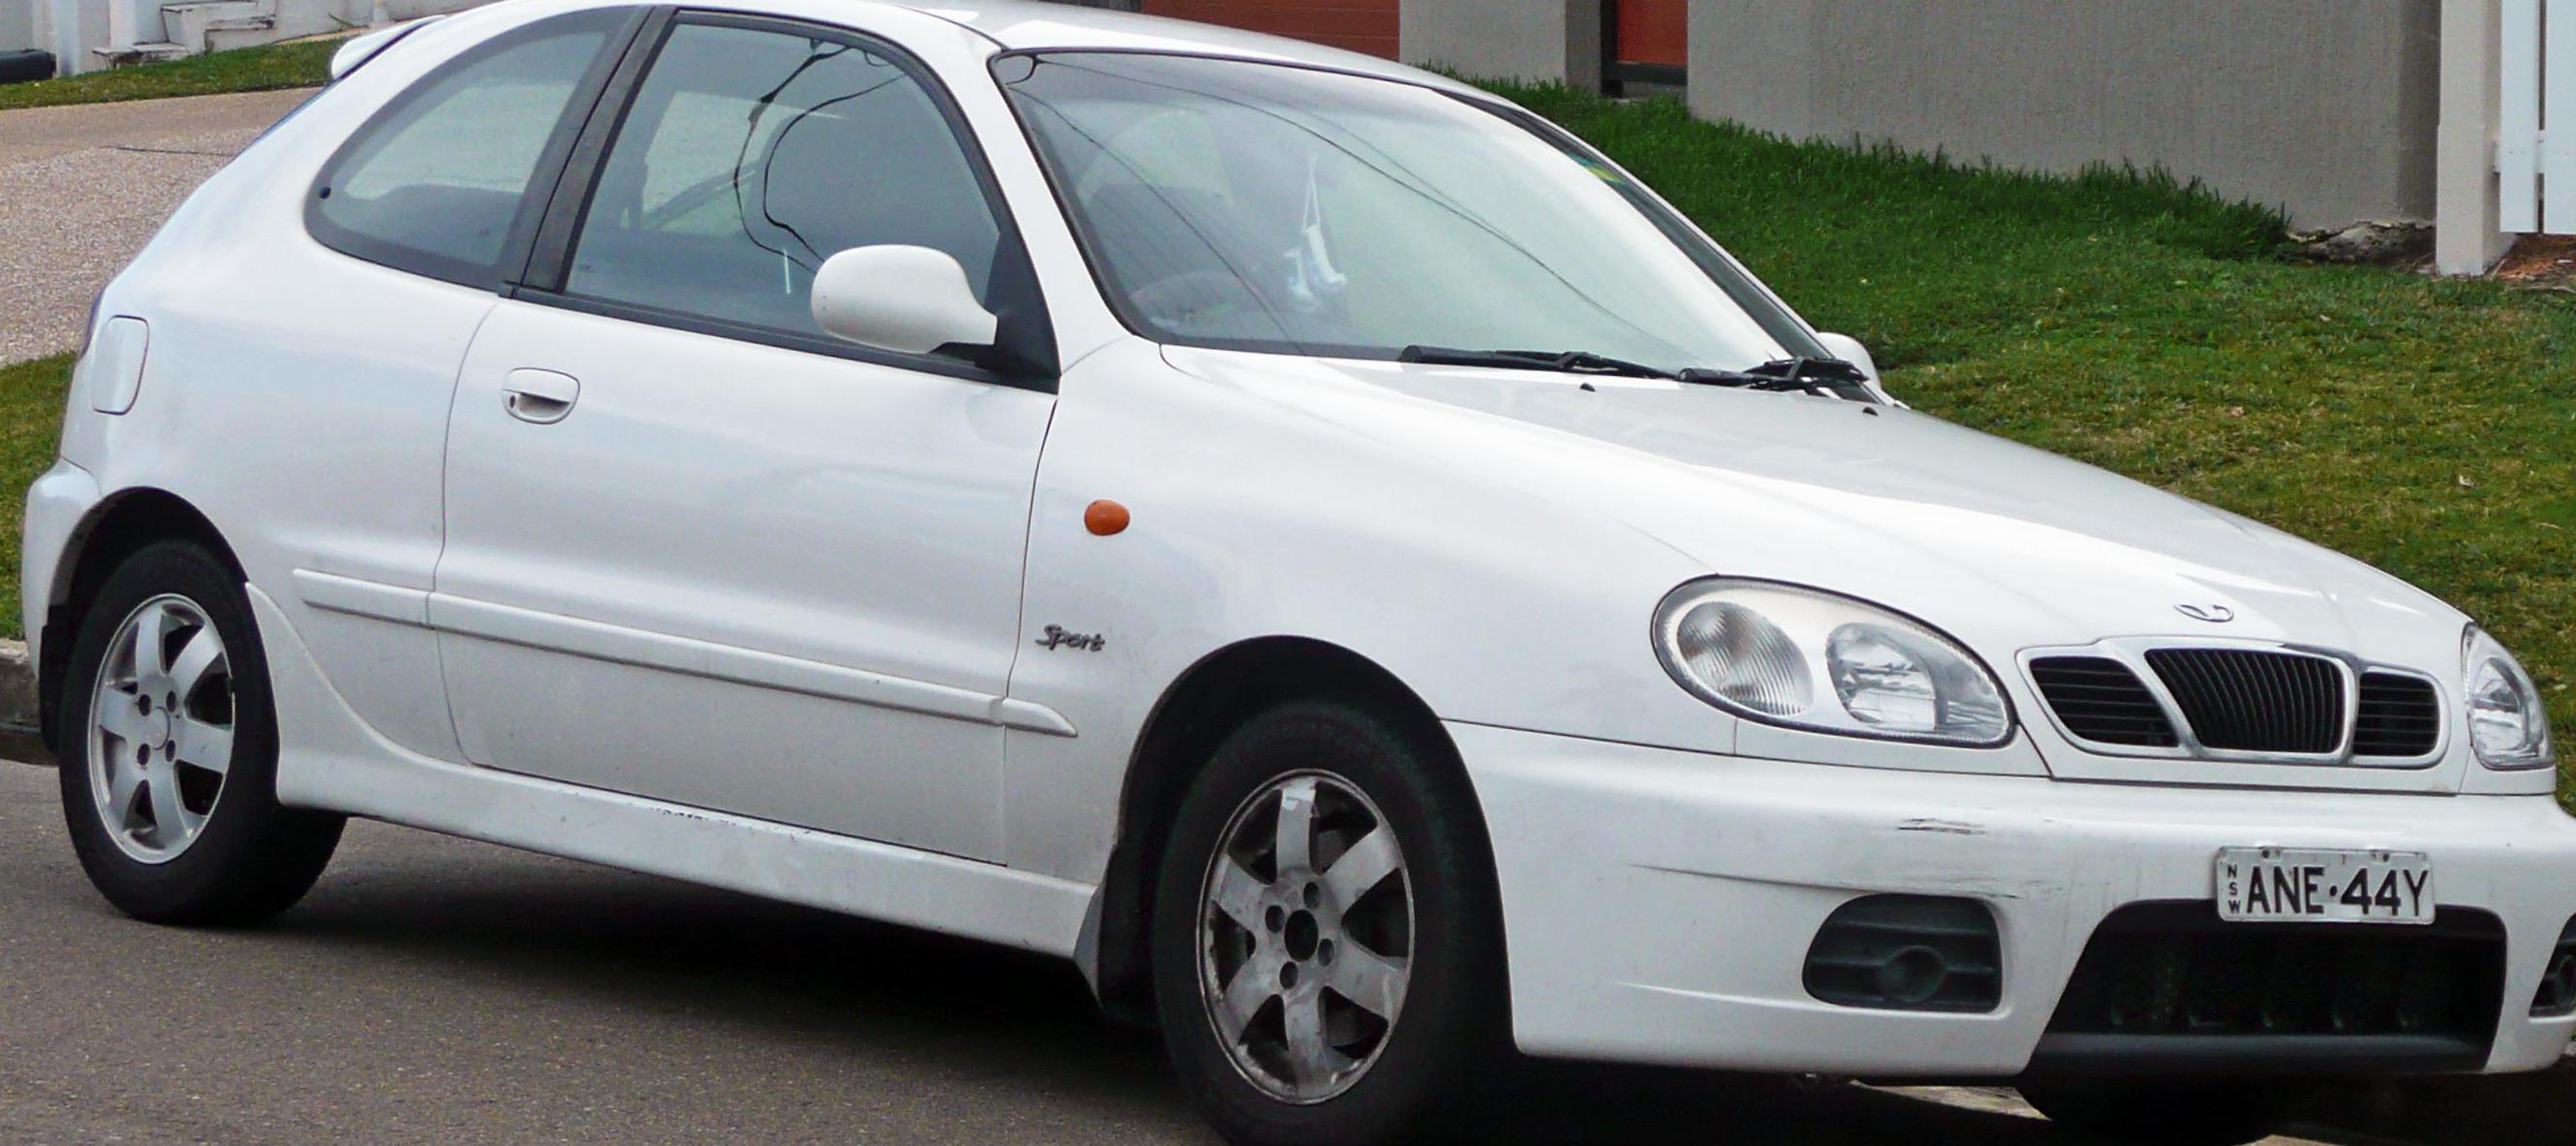 Sens Daewoo used 2005